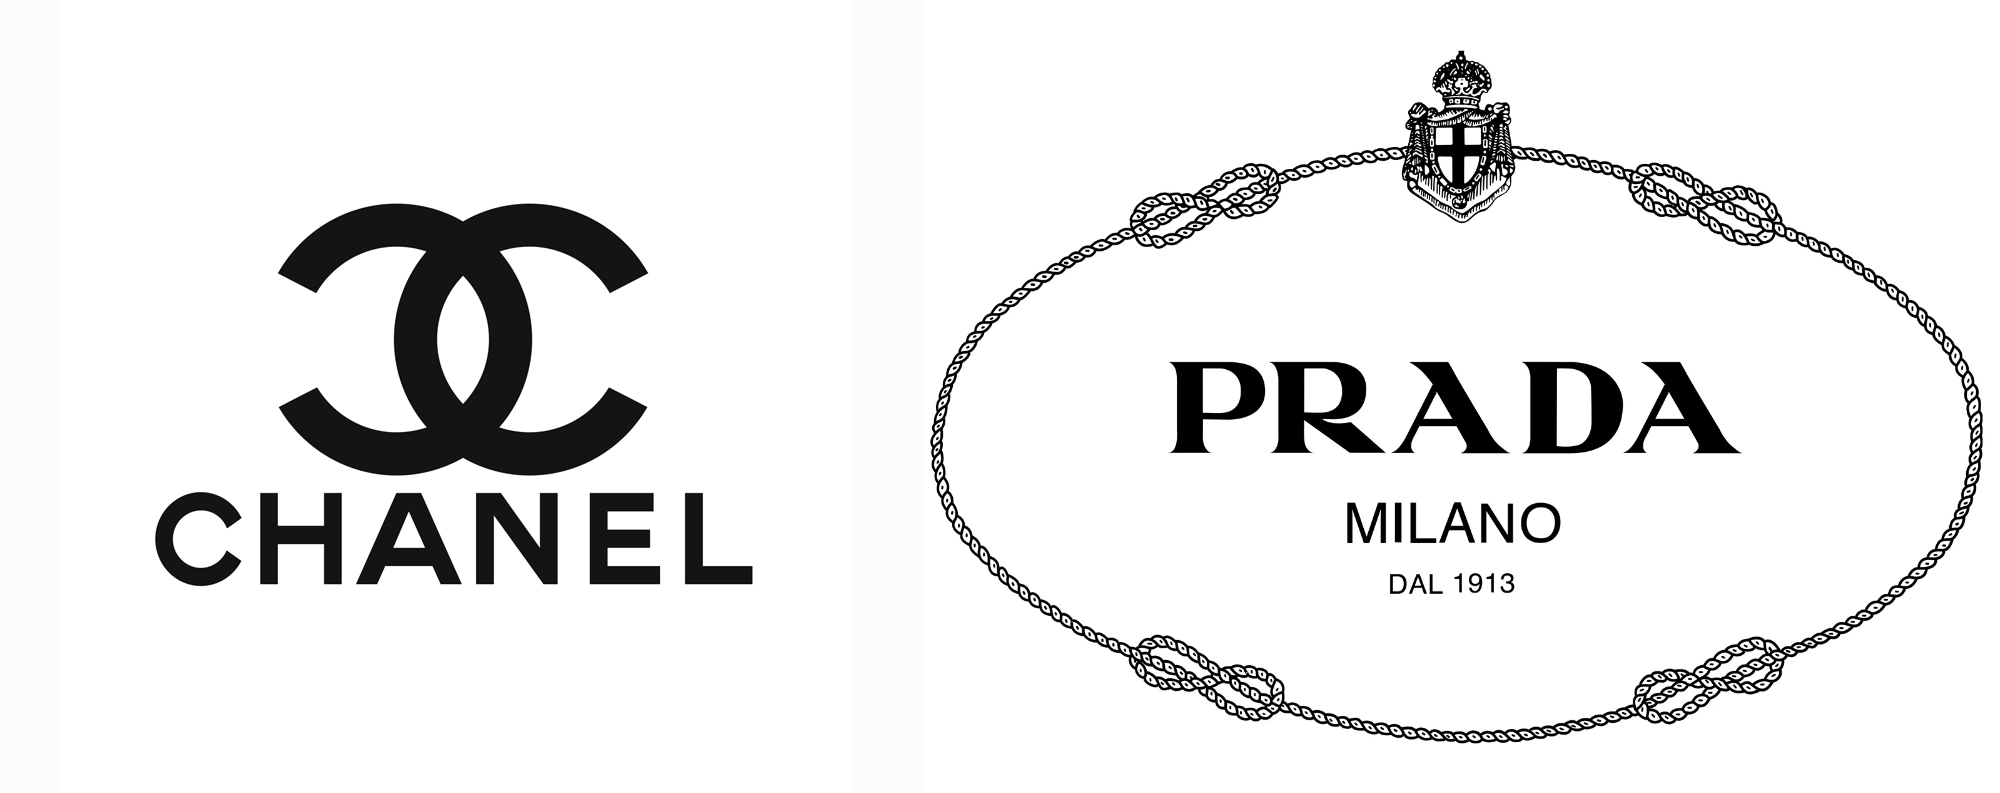 Логотипы французского модного дома Chanel и итальянского модного дома Prada